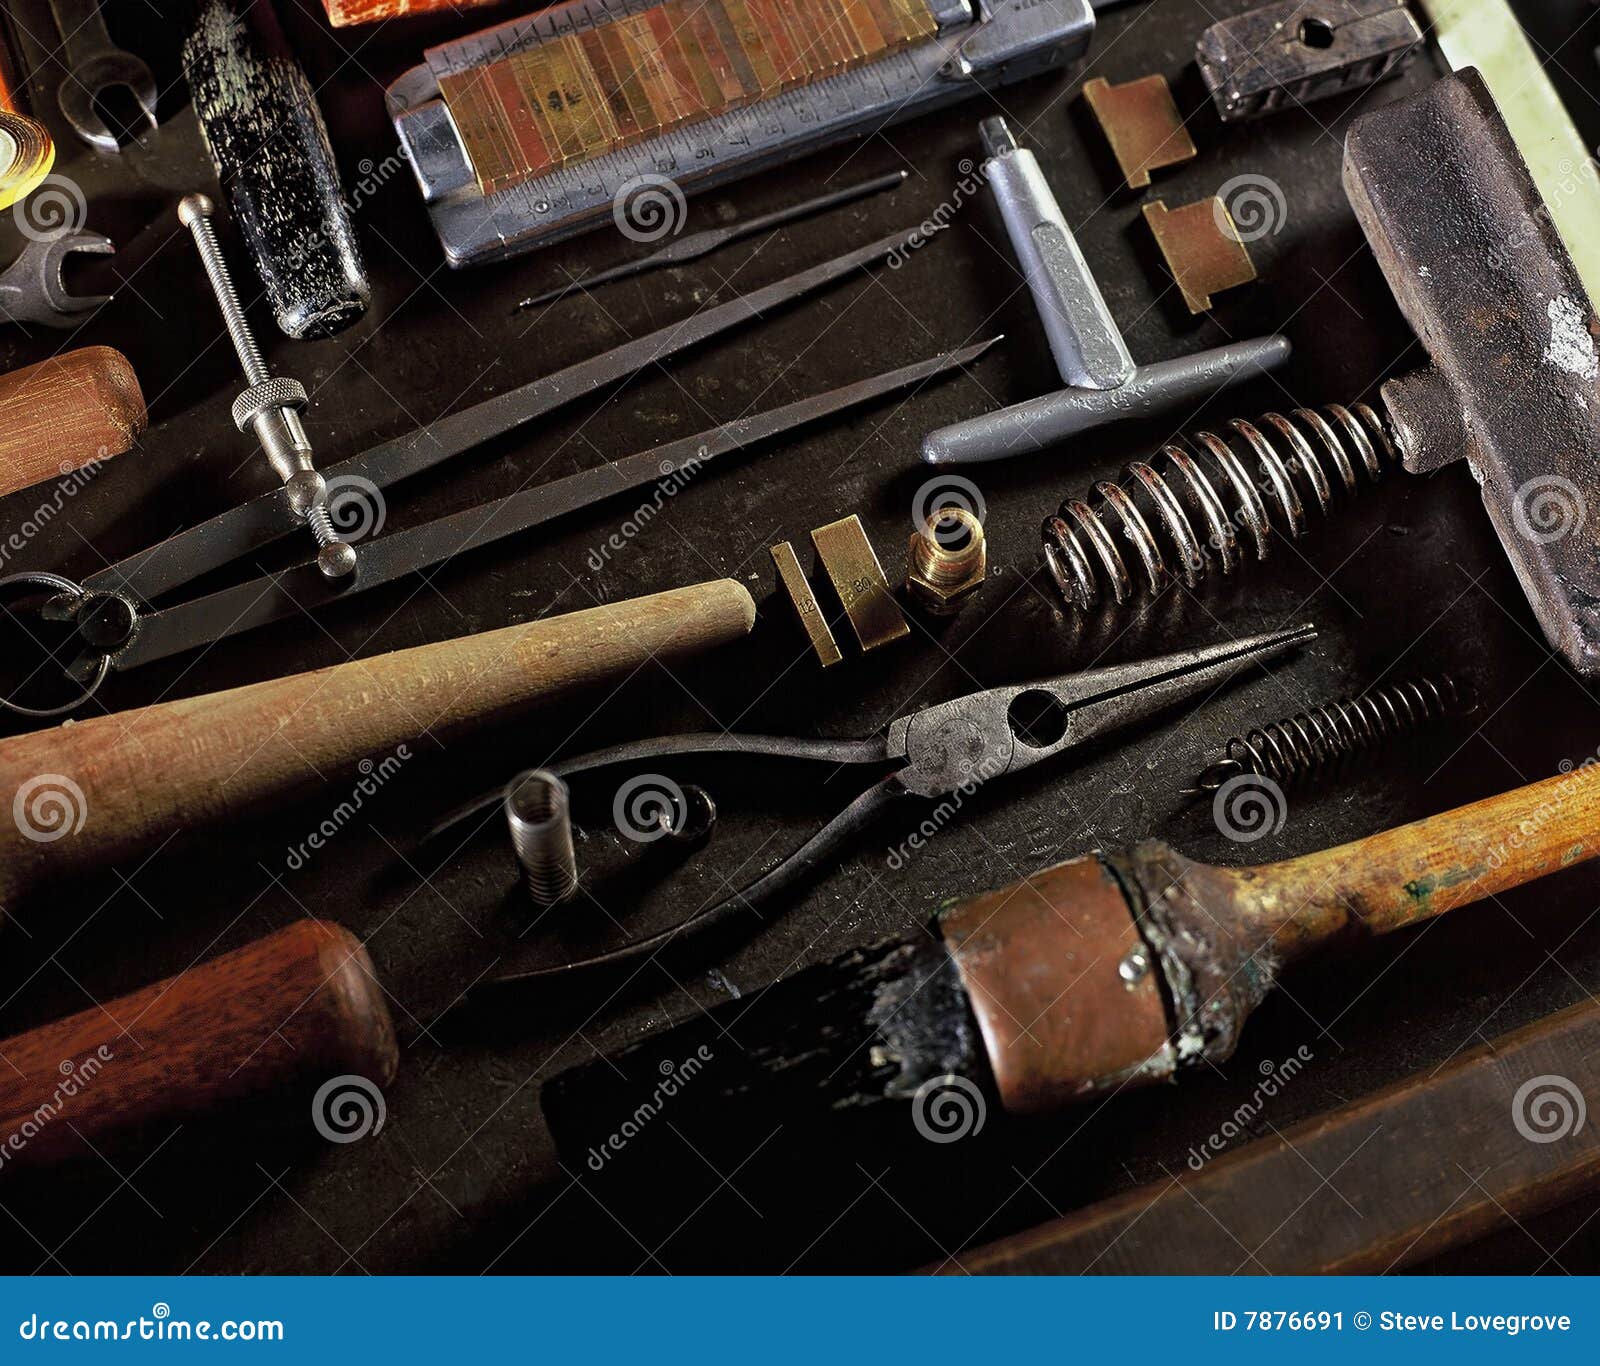 Book Binding Tools stock image. Image of craft, workshop - 7876691